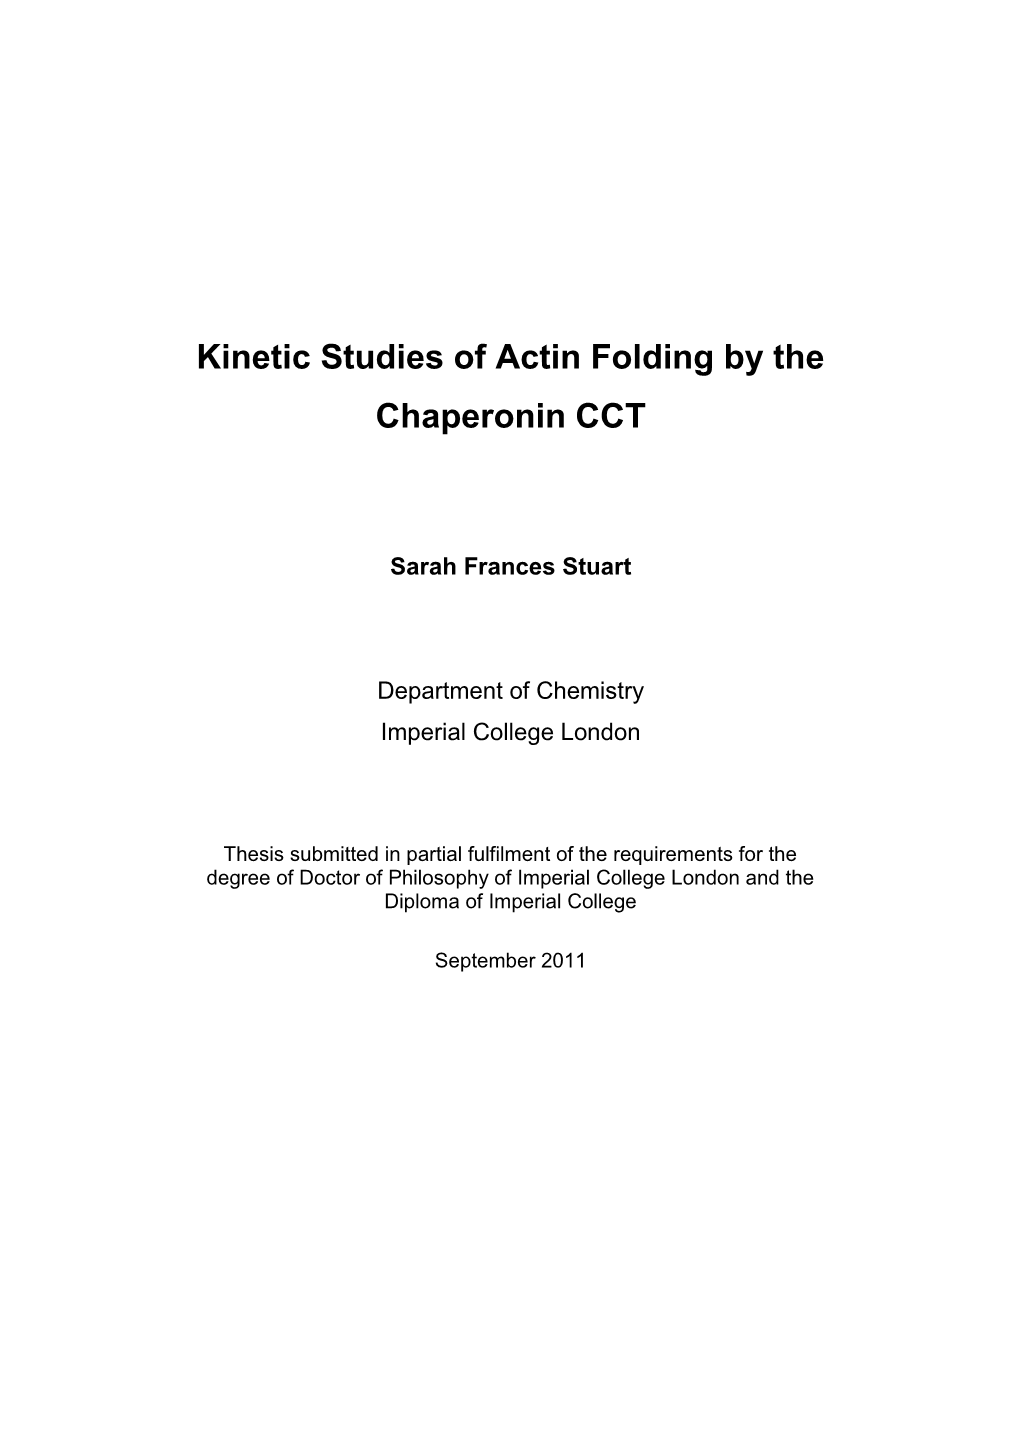 Actin Folding by the Chaperonin CCT